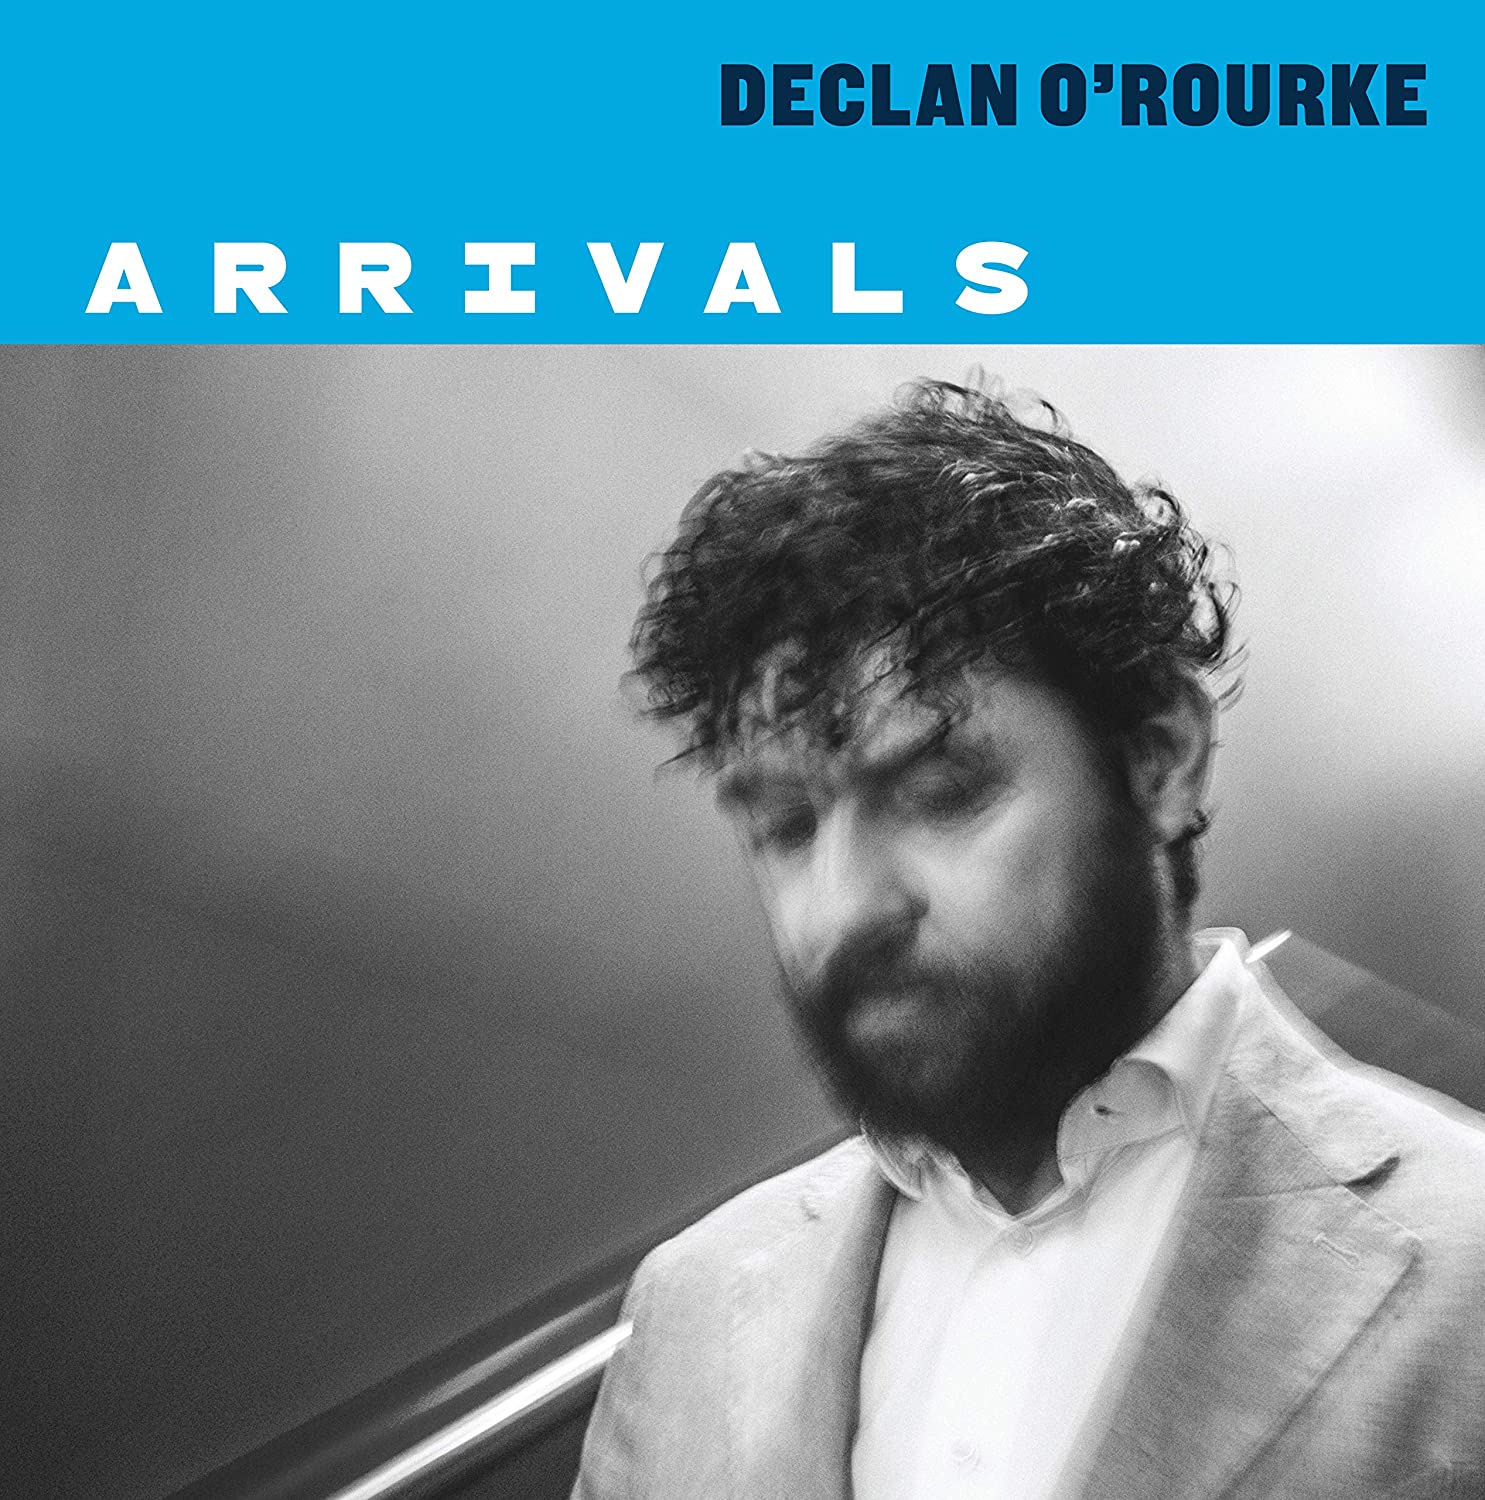 Declan O'Rourke Arrivals - Ireland Vinyl